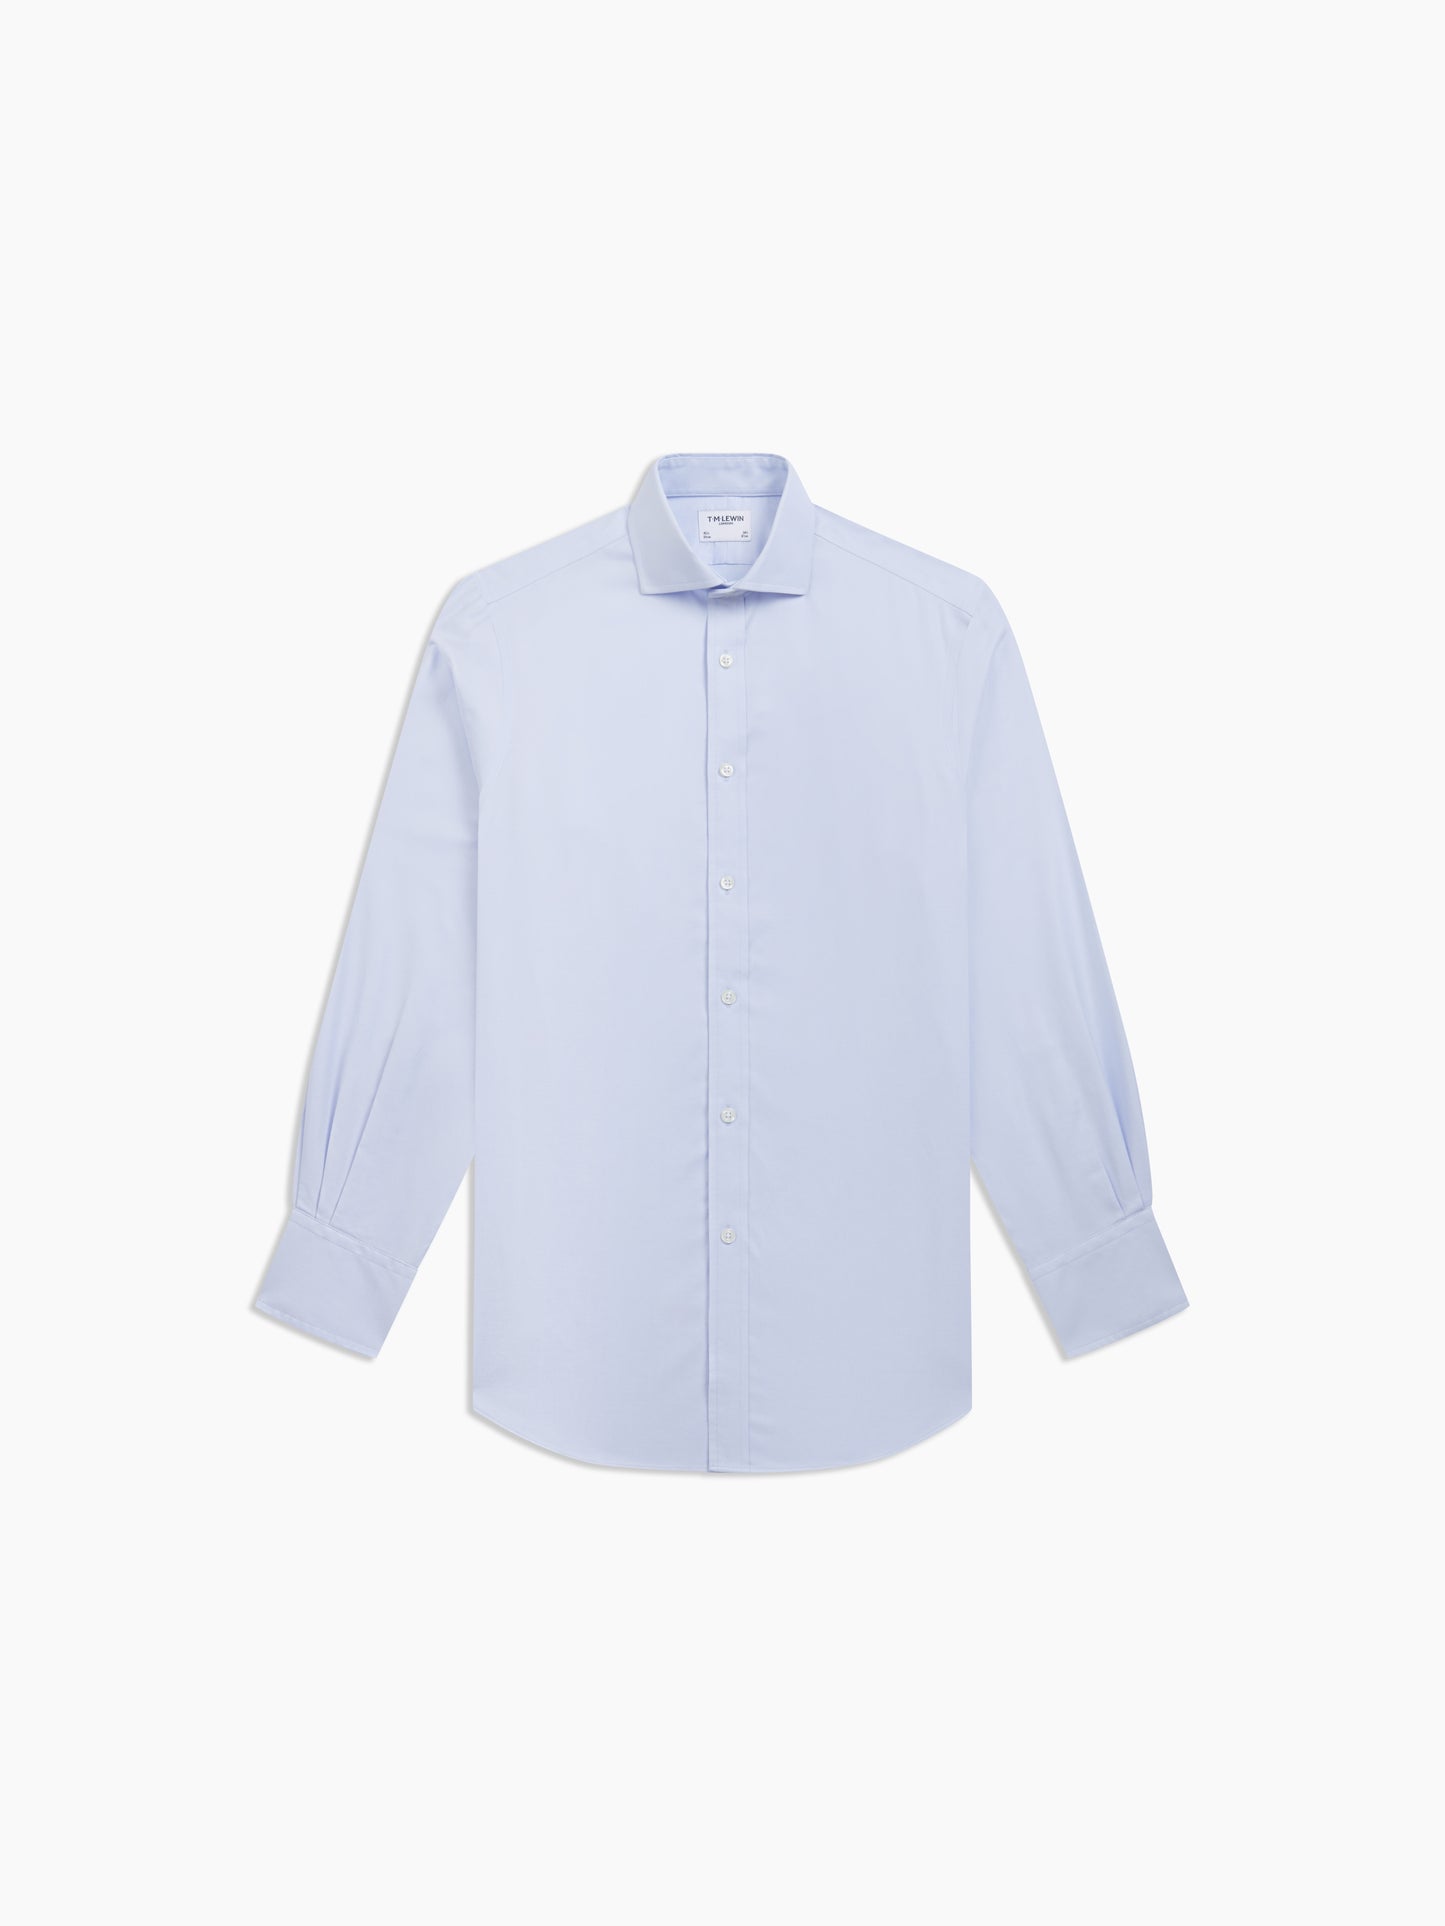 Image 2 of Non-Iron Sky Blue Plain Oxford Regular Fit Duel Cuff Classic Collar Shirt